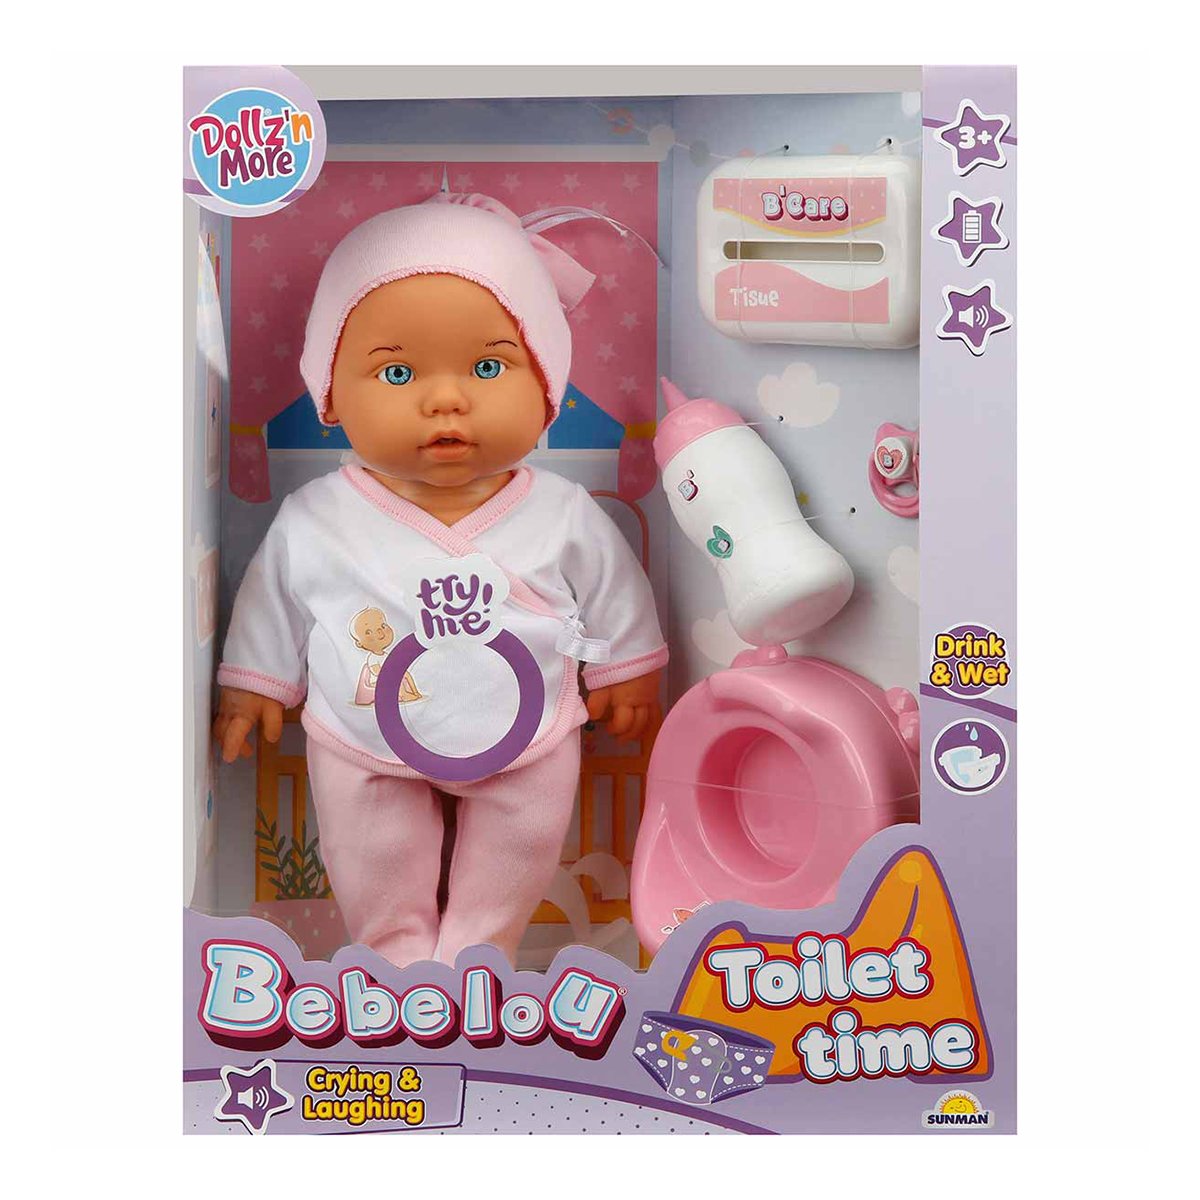 Papusa bebelus Bebelou, Dollz n More, Toilet Time, 35 cm, roz Bebelou